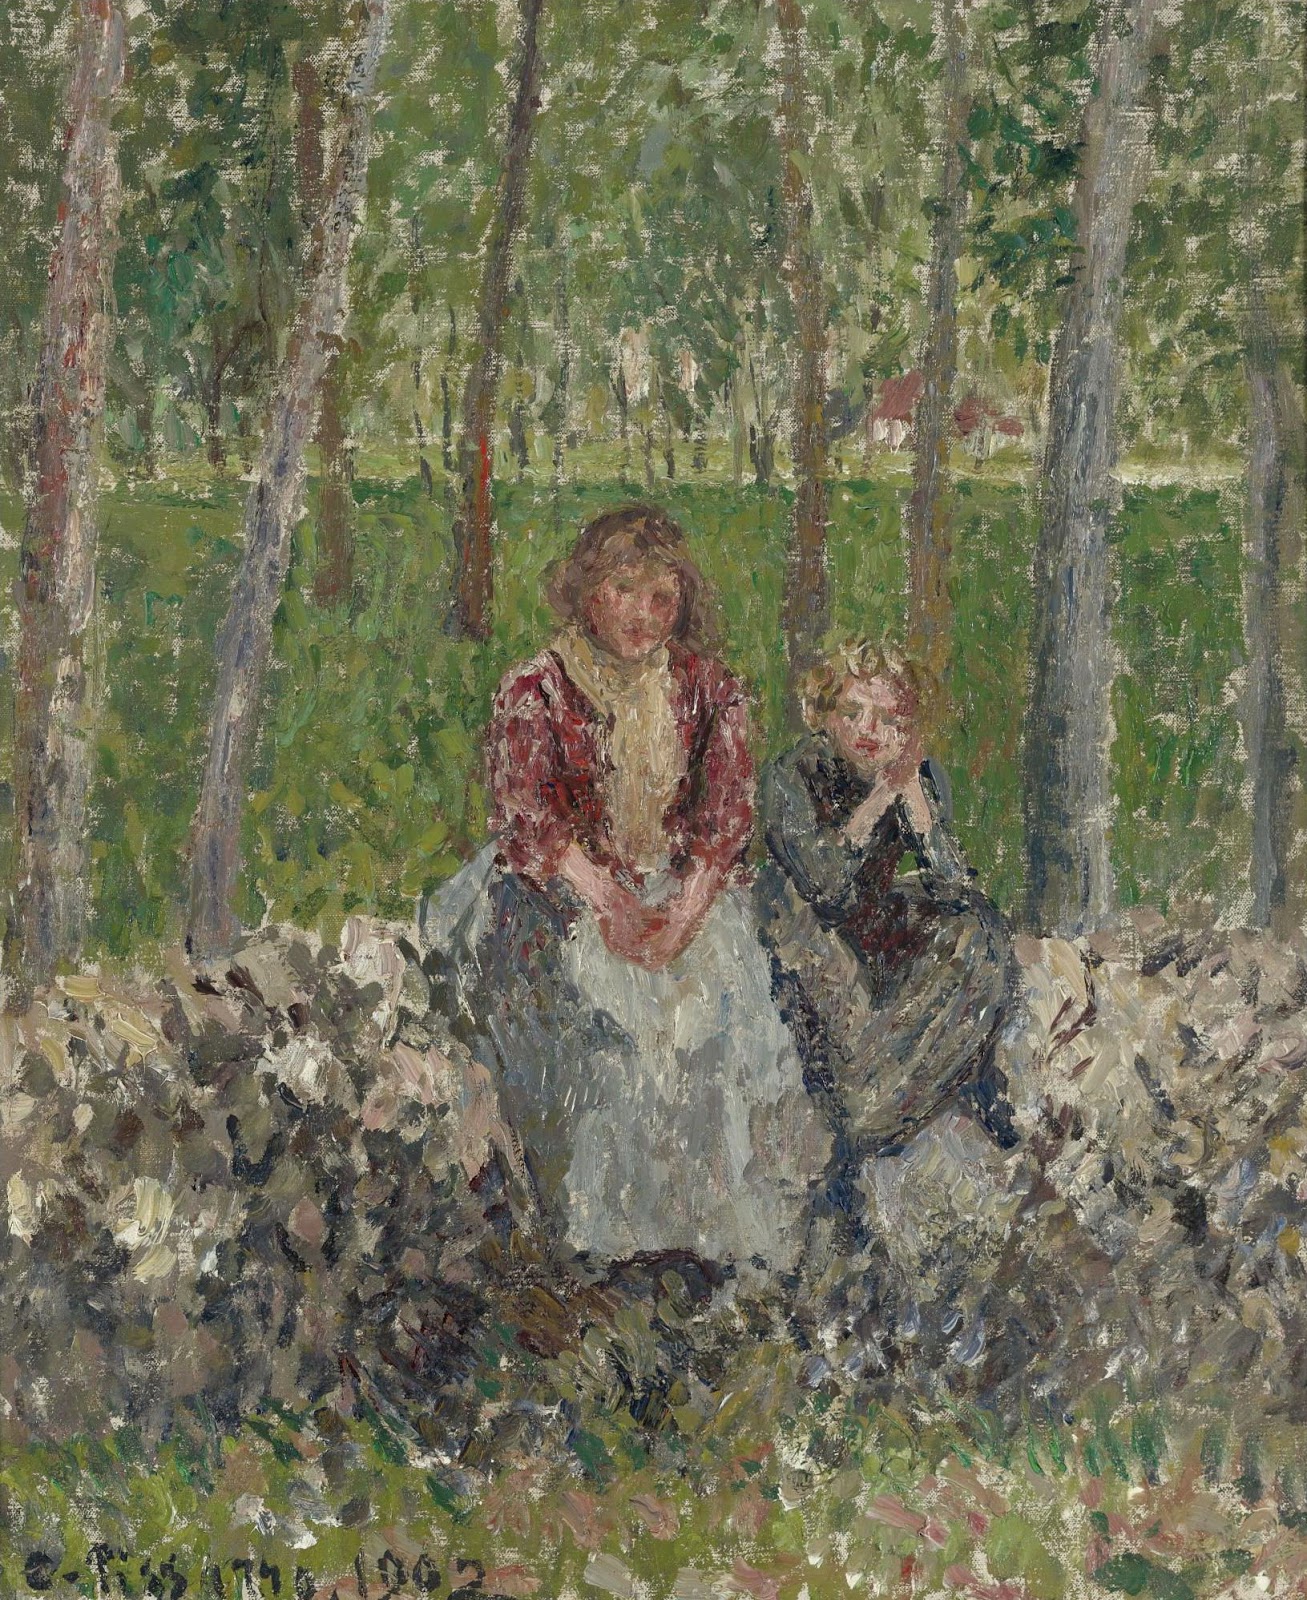 Camille+Pissarro-1830-1903 (395).jpg